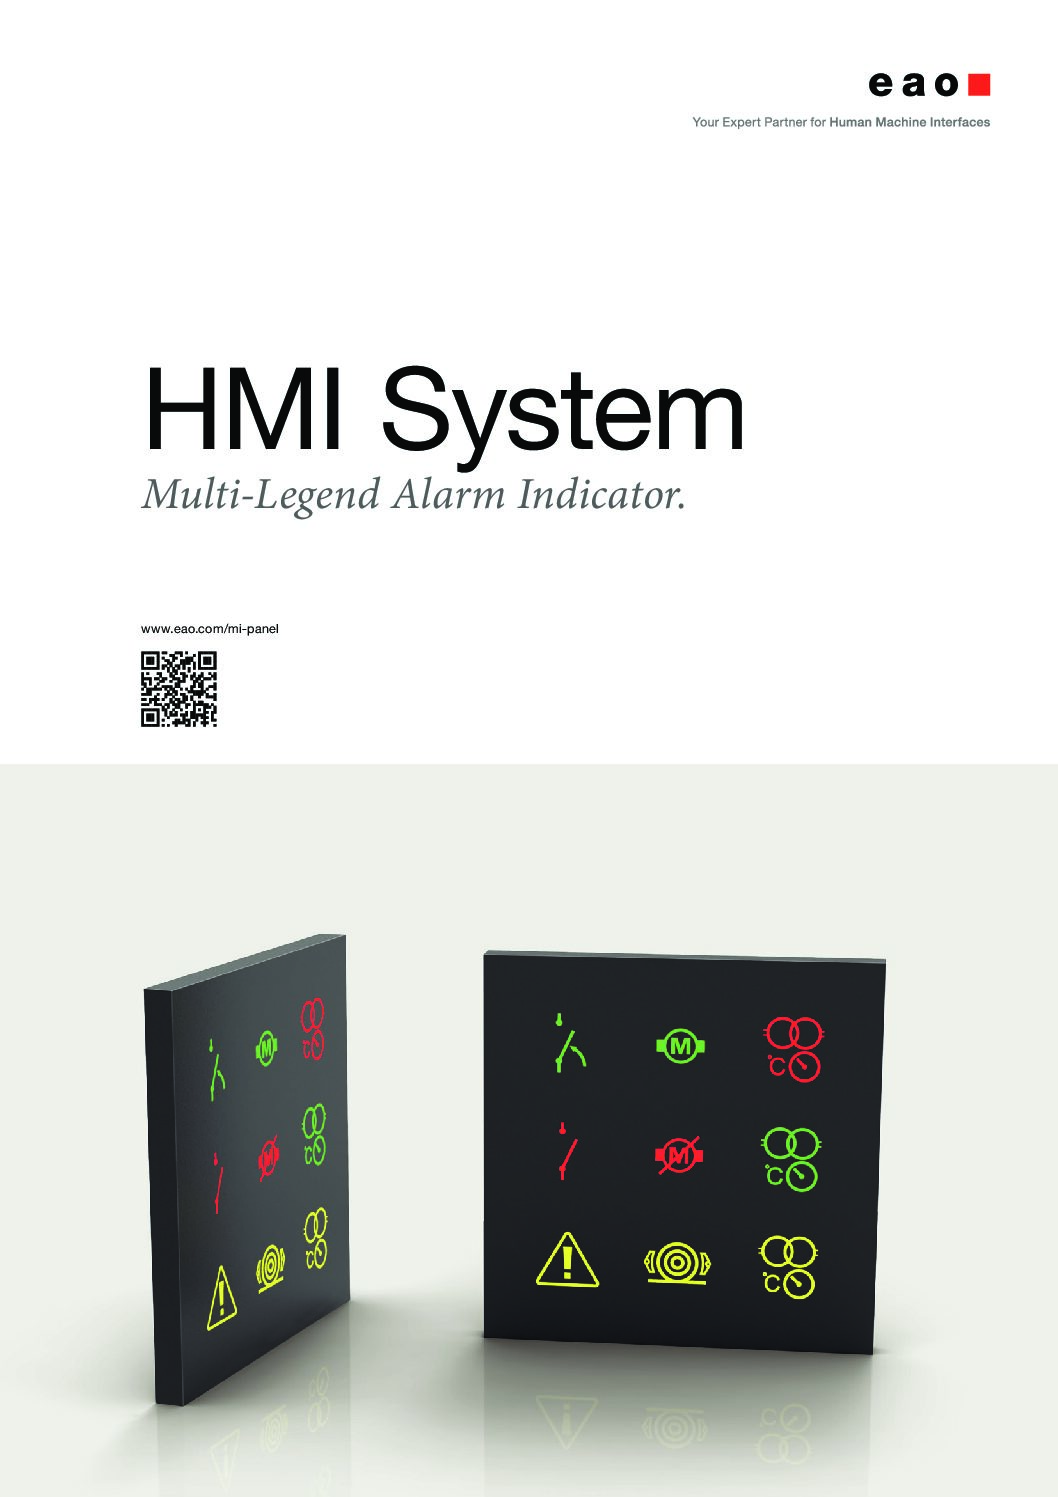 HMI System – Multi-Legend Alarm Indicator